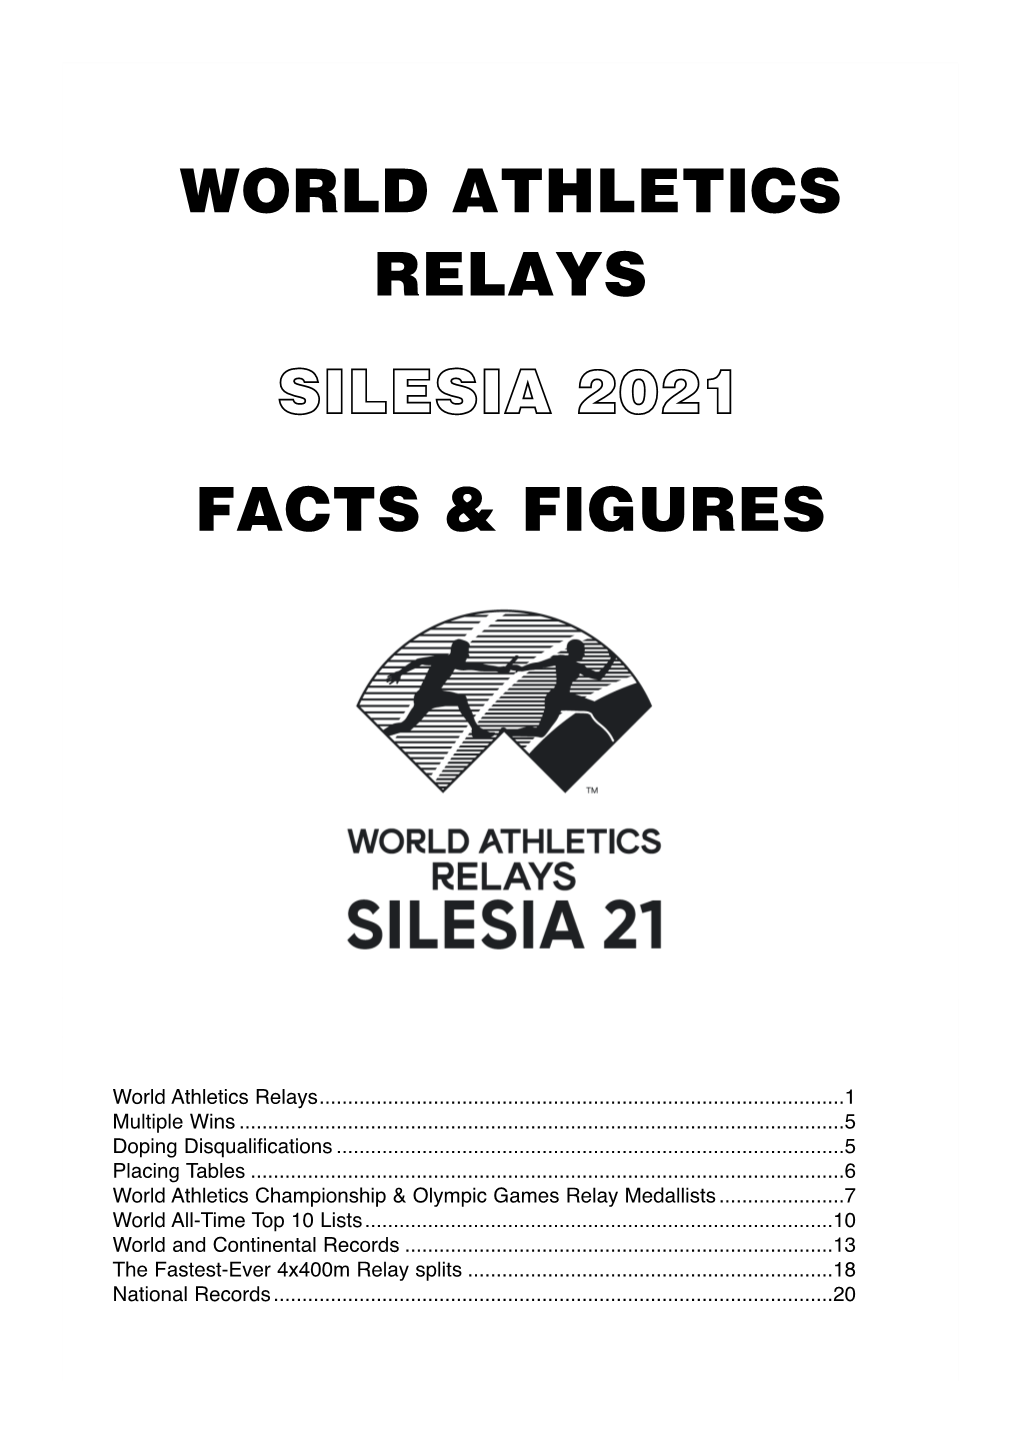 World Athletics Relays Facts & Figures